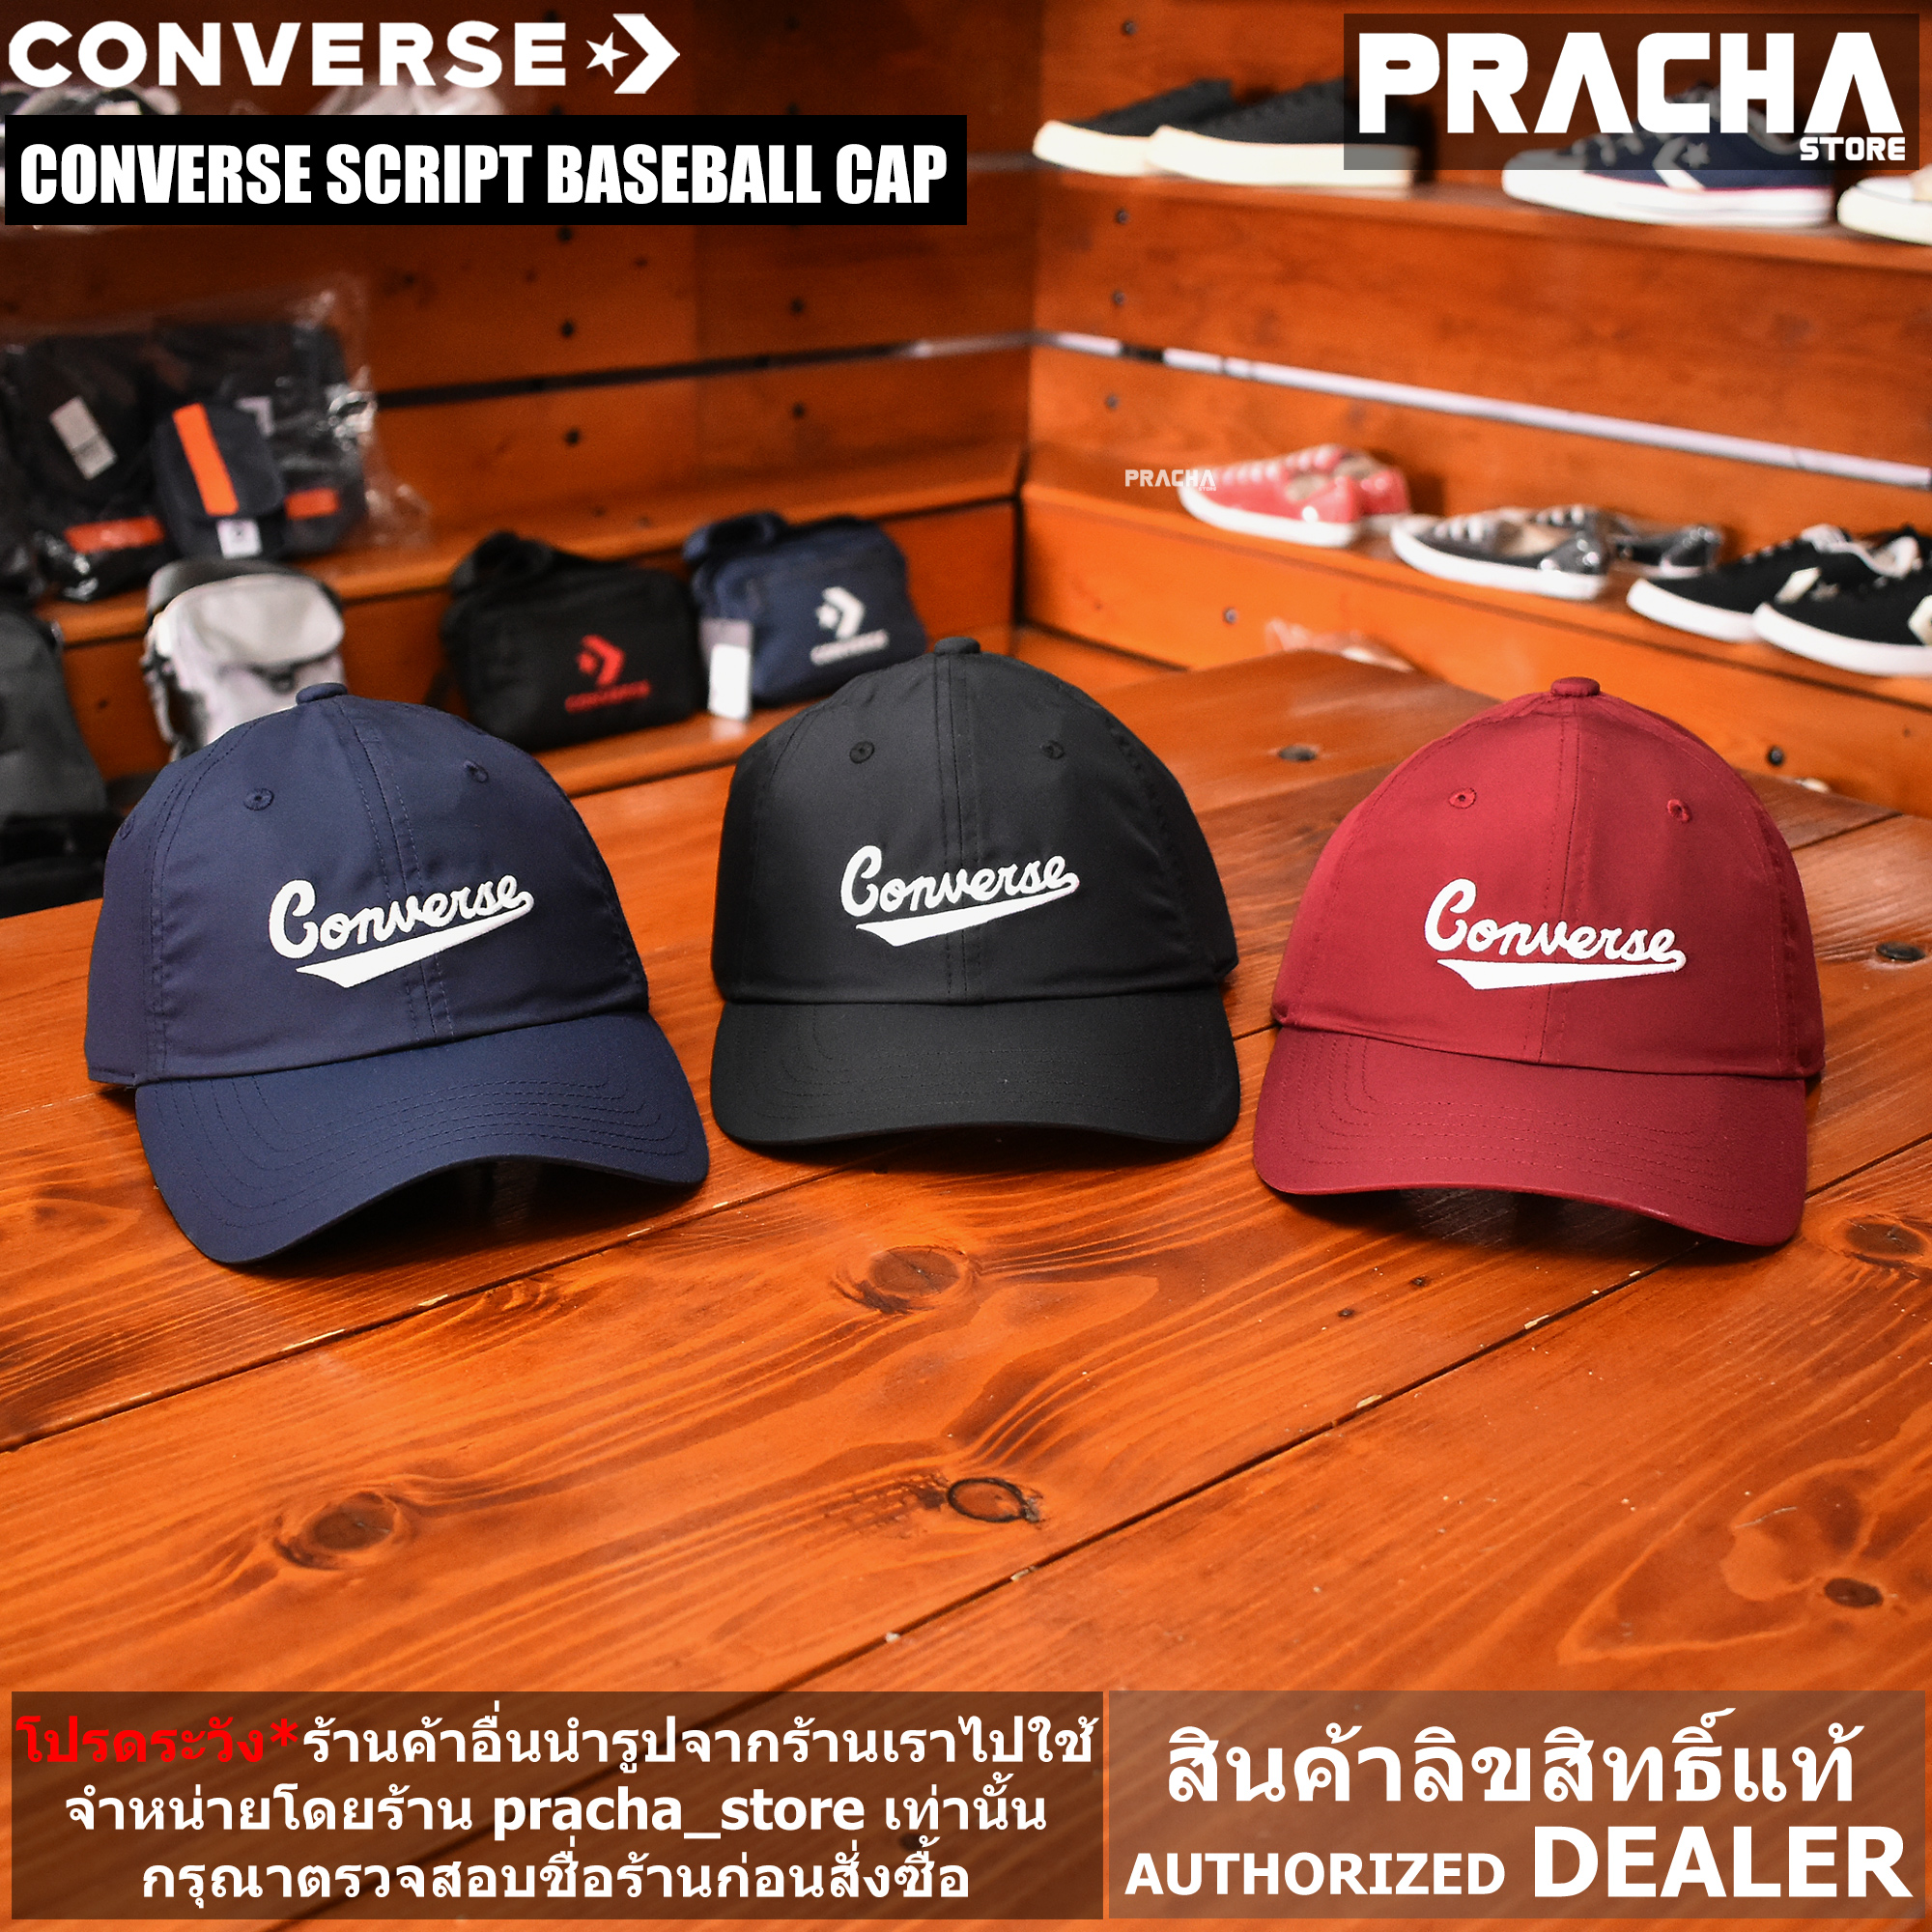 Converse script baseball cap หมวก converse [ลิขสิทธิ์แท้]